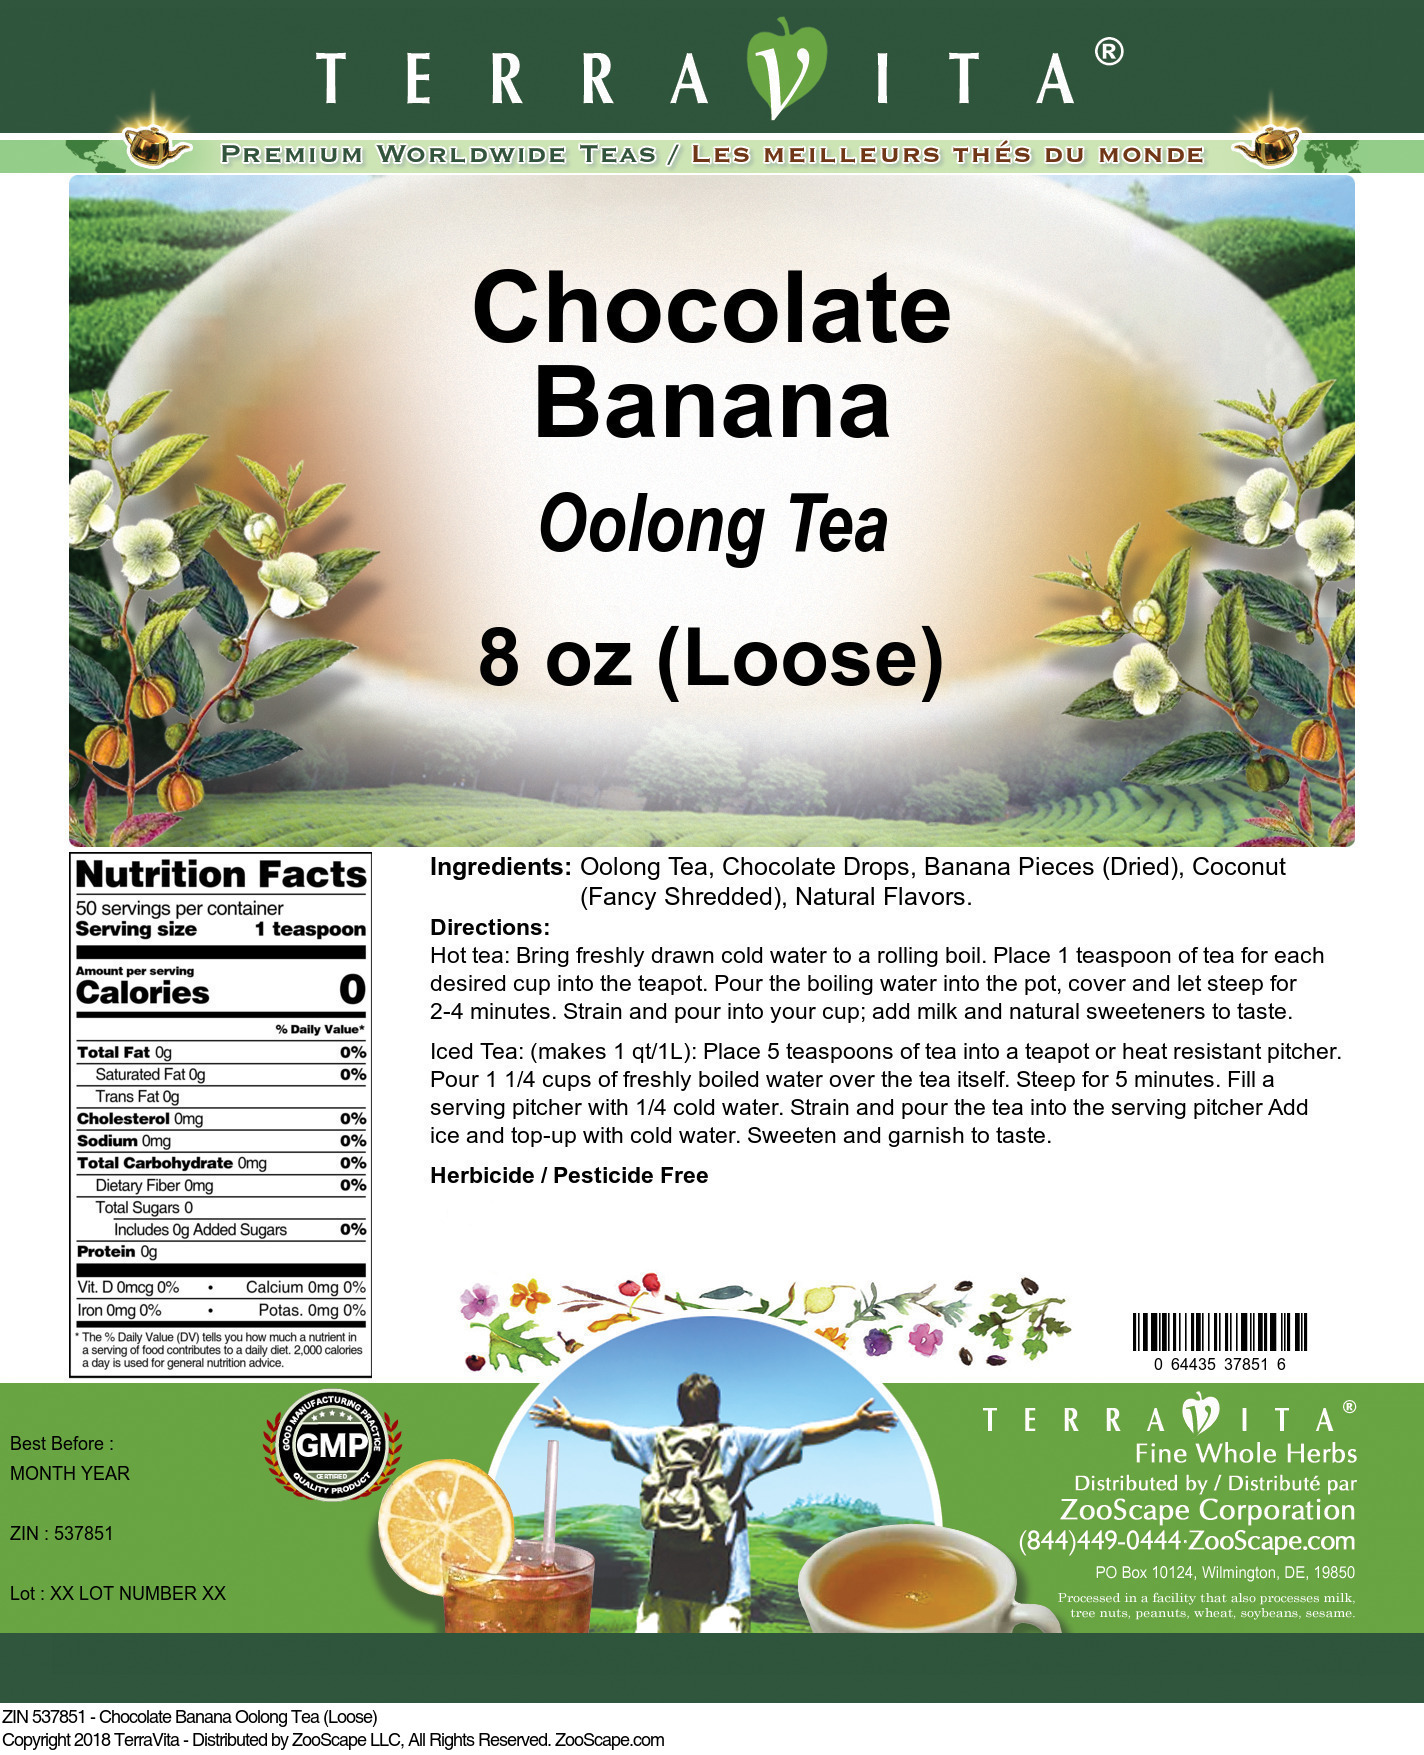 Chocolate Banana Oolong Tea (Loose) - Label